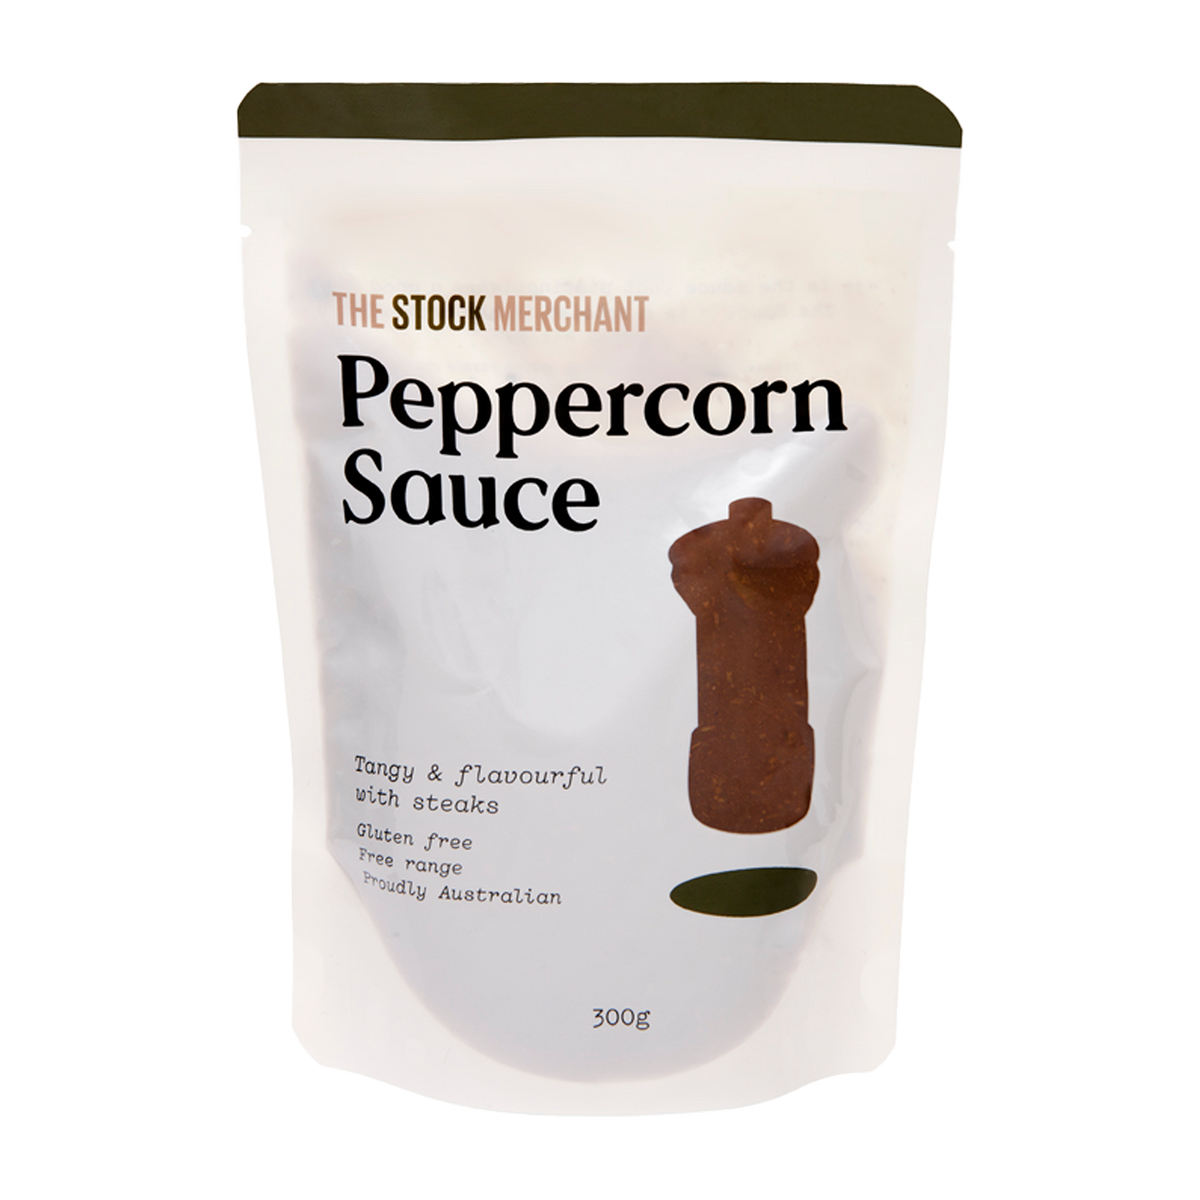 All-Natural Peppercorn Sauce from Australia (300g) - Horizon Farms